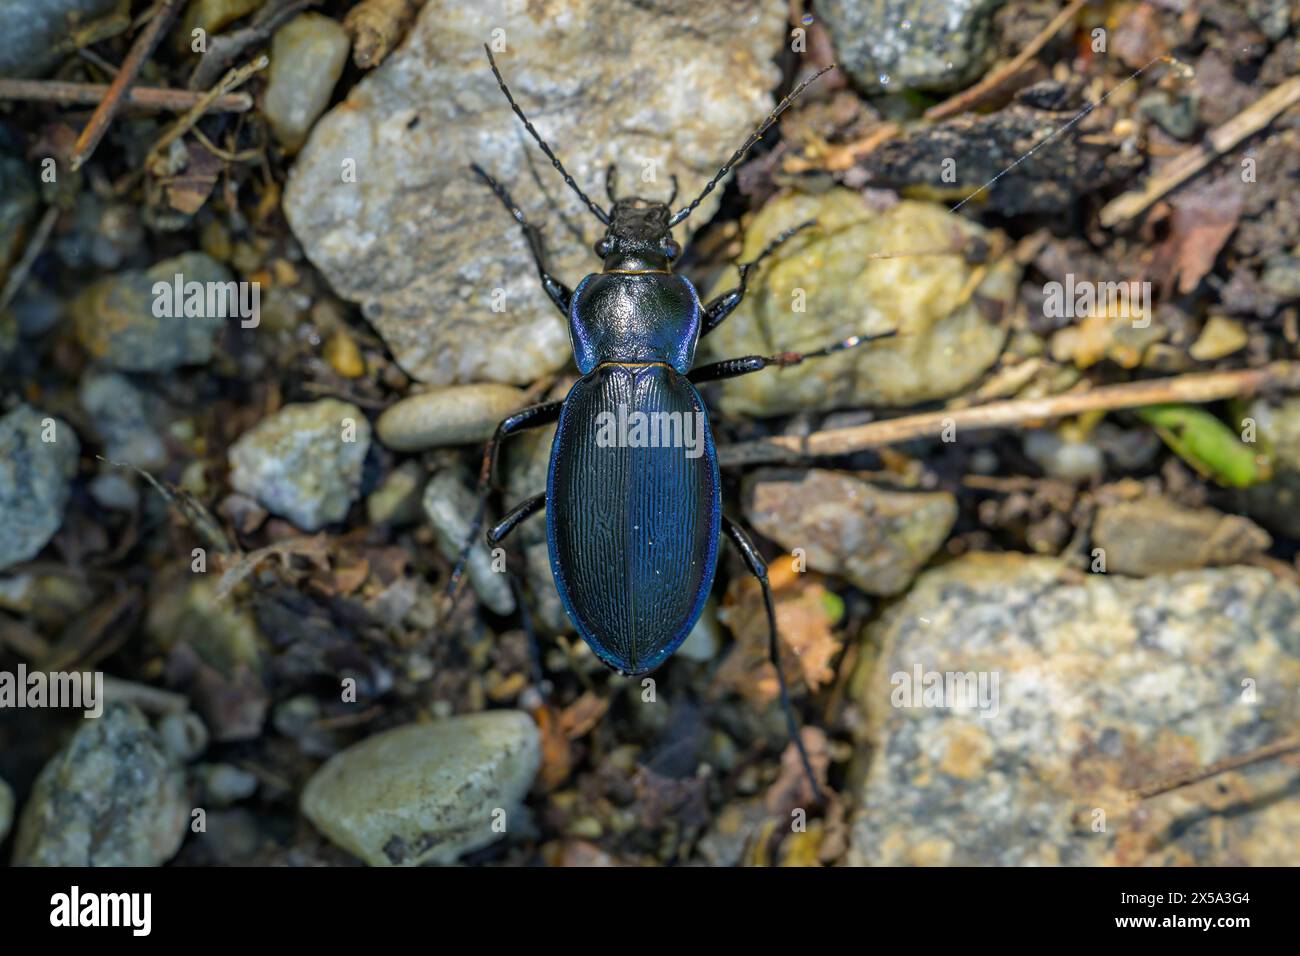 A big ground beetle Carabus scheidleri walking on the ground in a forest in Austria Leitzersdorf Austria Stock Photo